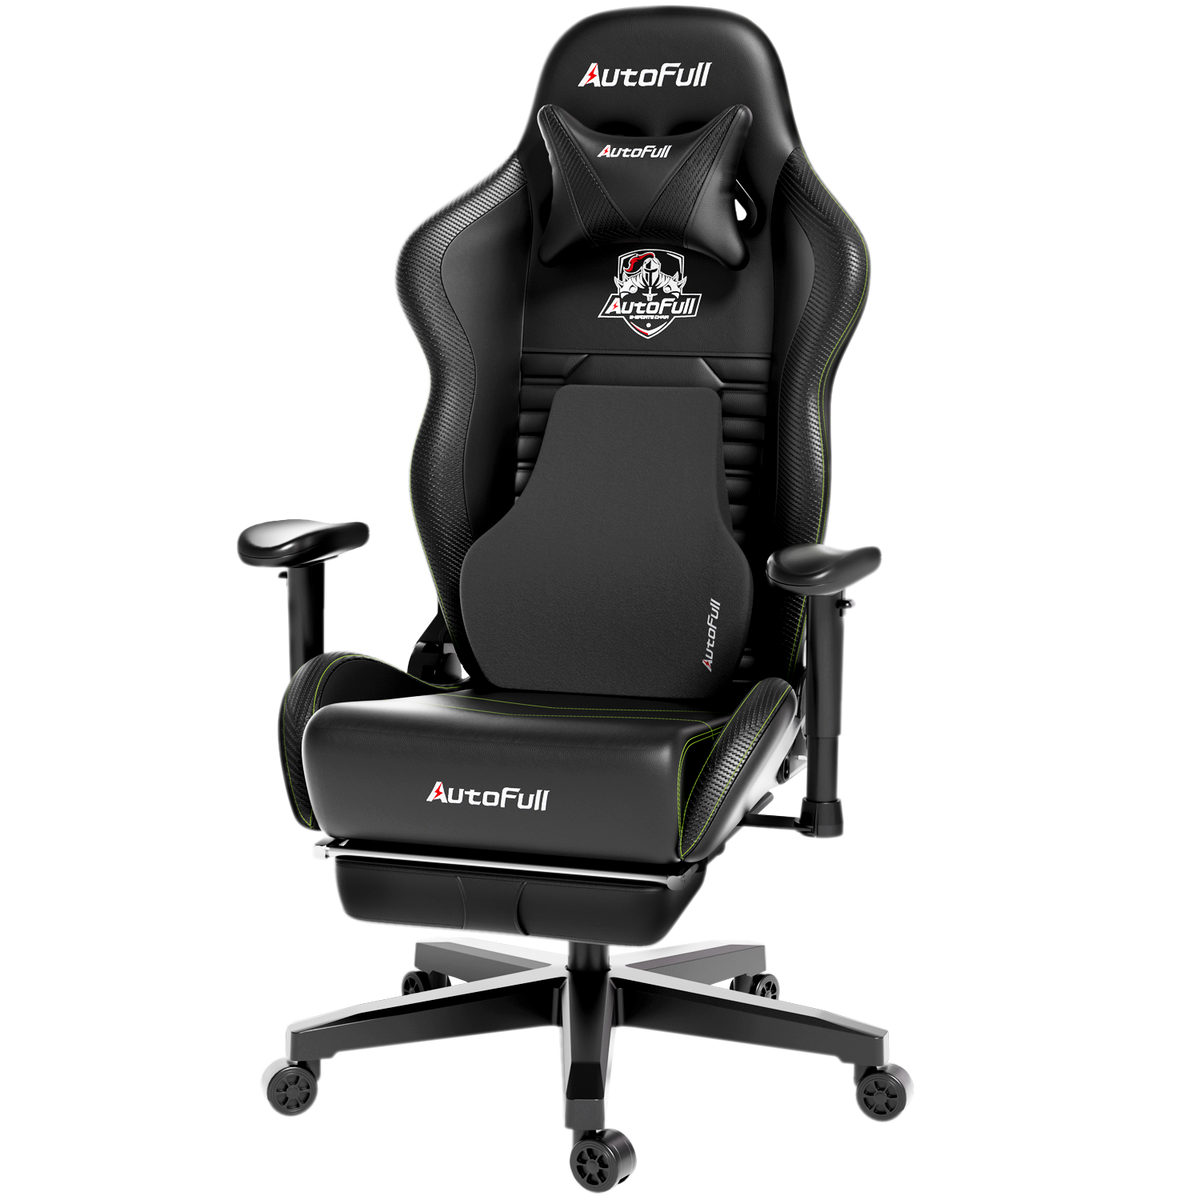 AutoFull C3 Gaming Chair, Black Color